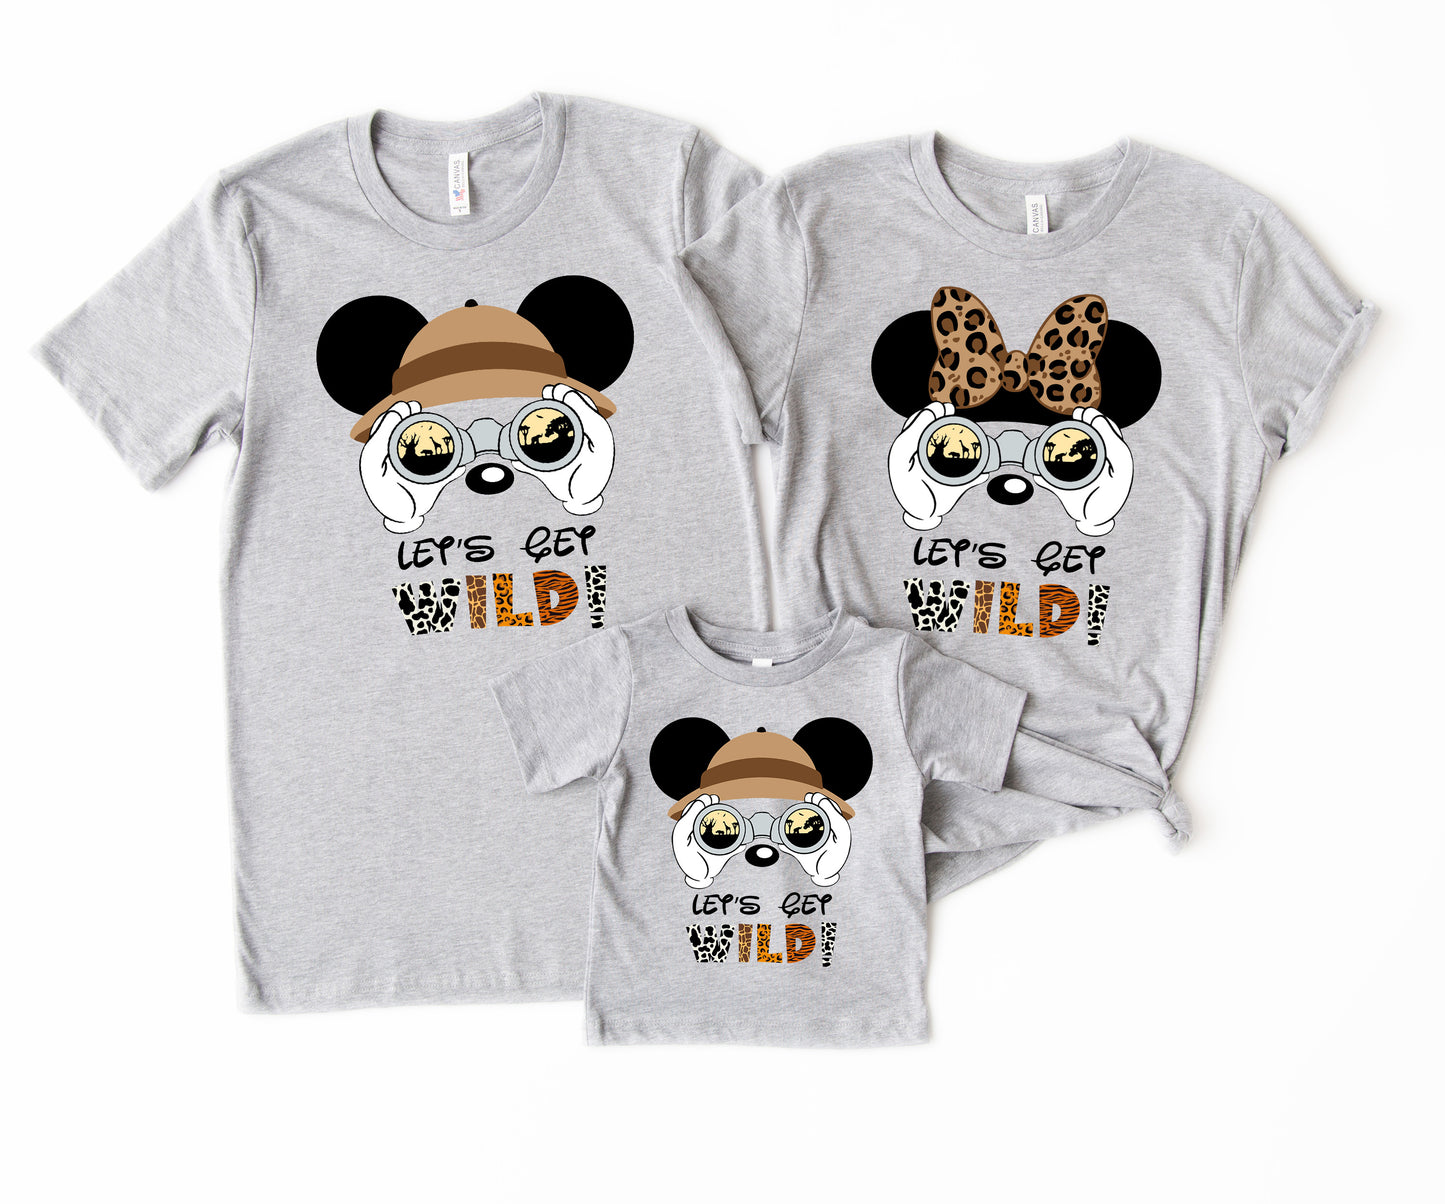 Disney Safari Shirt, Disney Animal Kingdom Shirt, Disney Safari Outfit - newamarketing